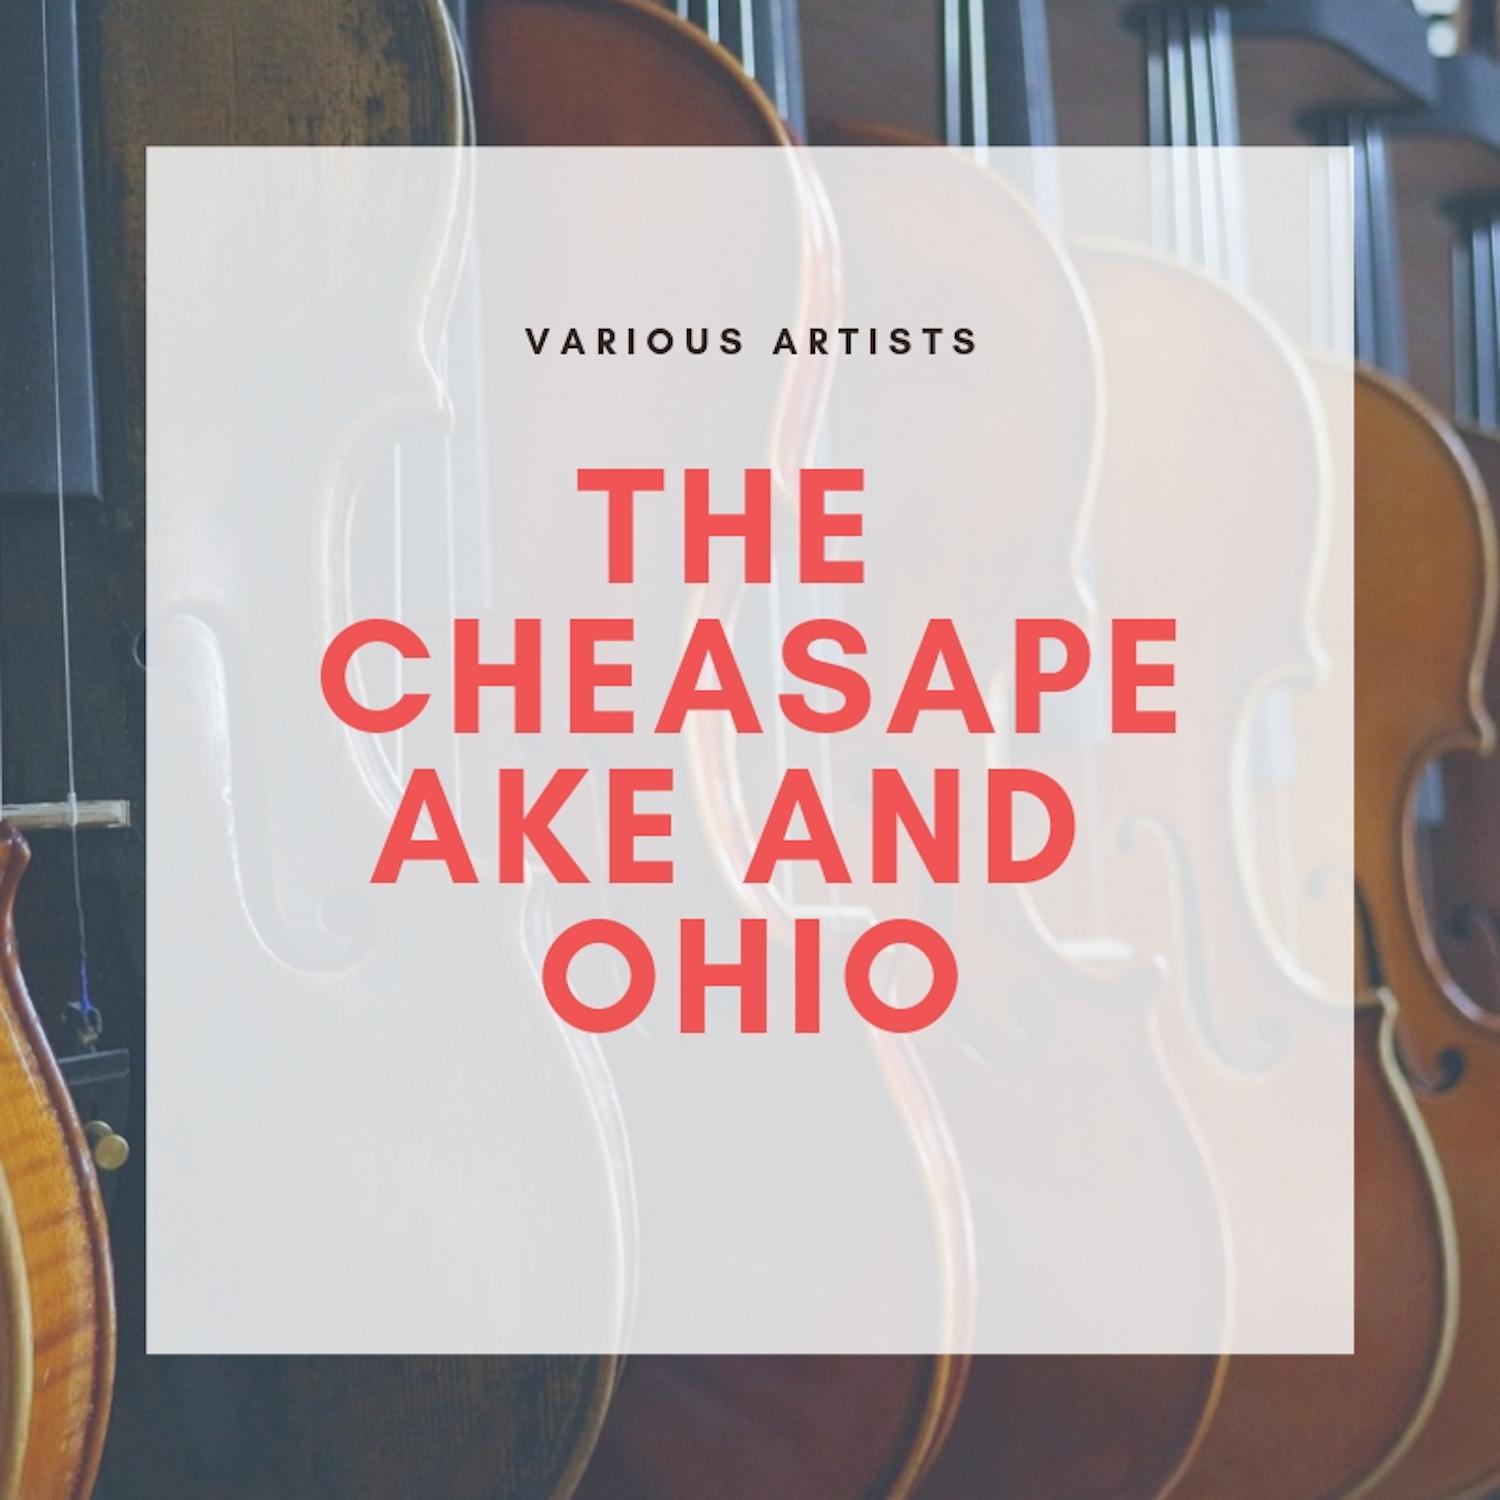 The Cheasapeake and Ohio